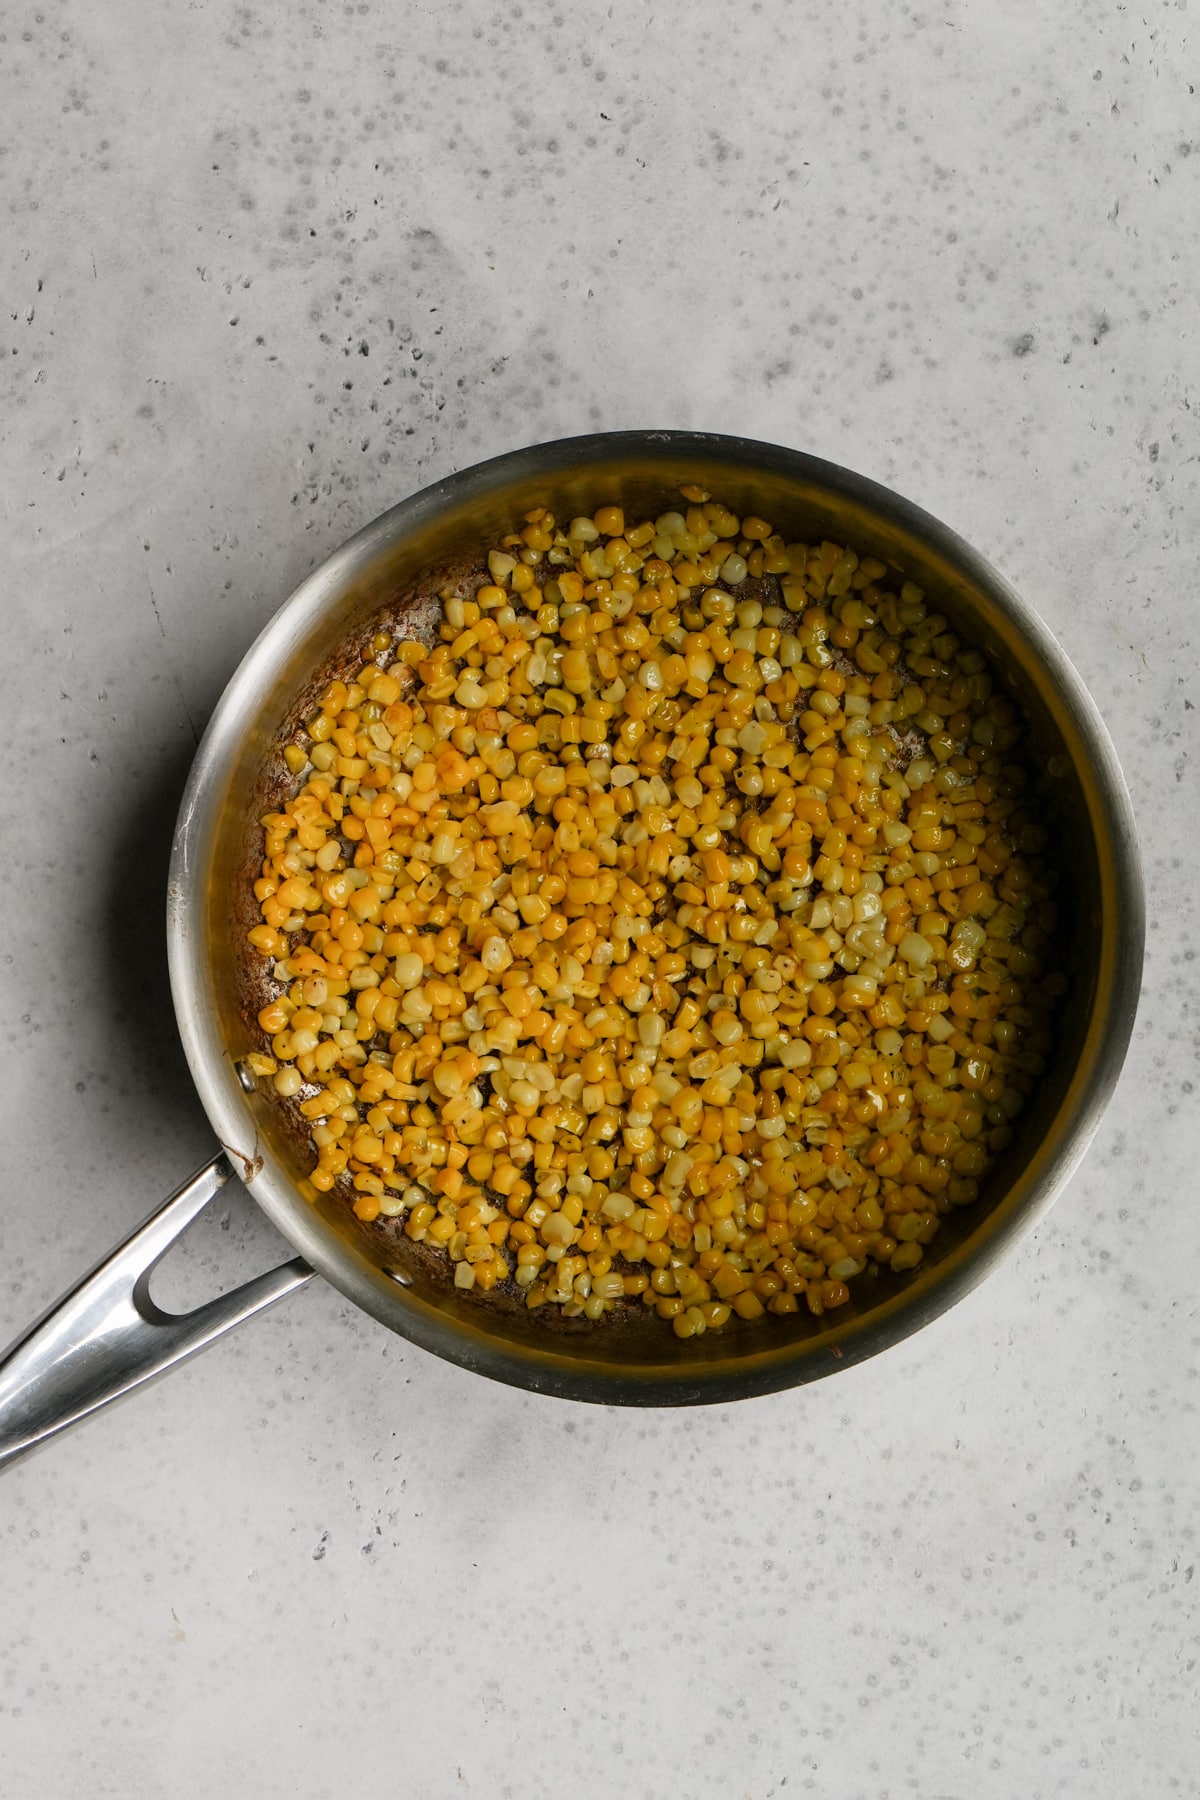 Italian farro salad process - sauteed corn kernels in a pan